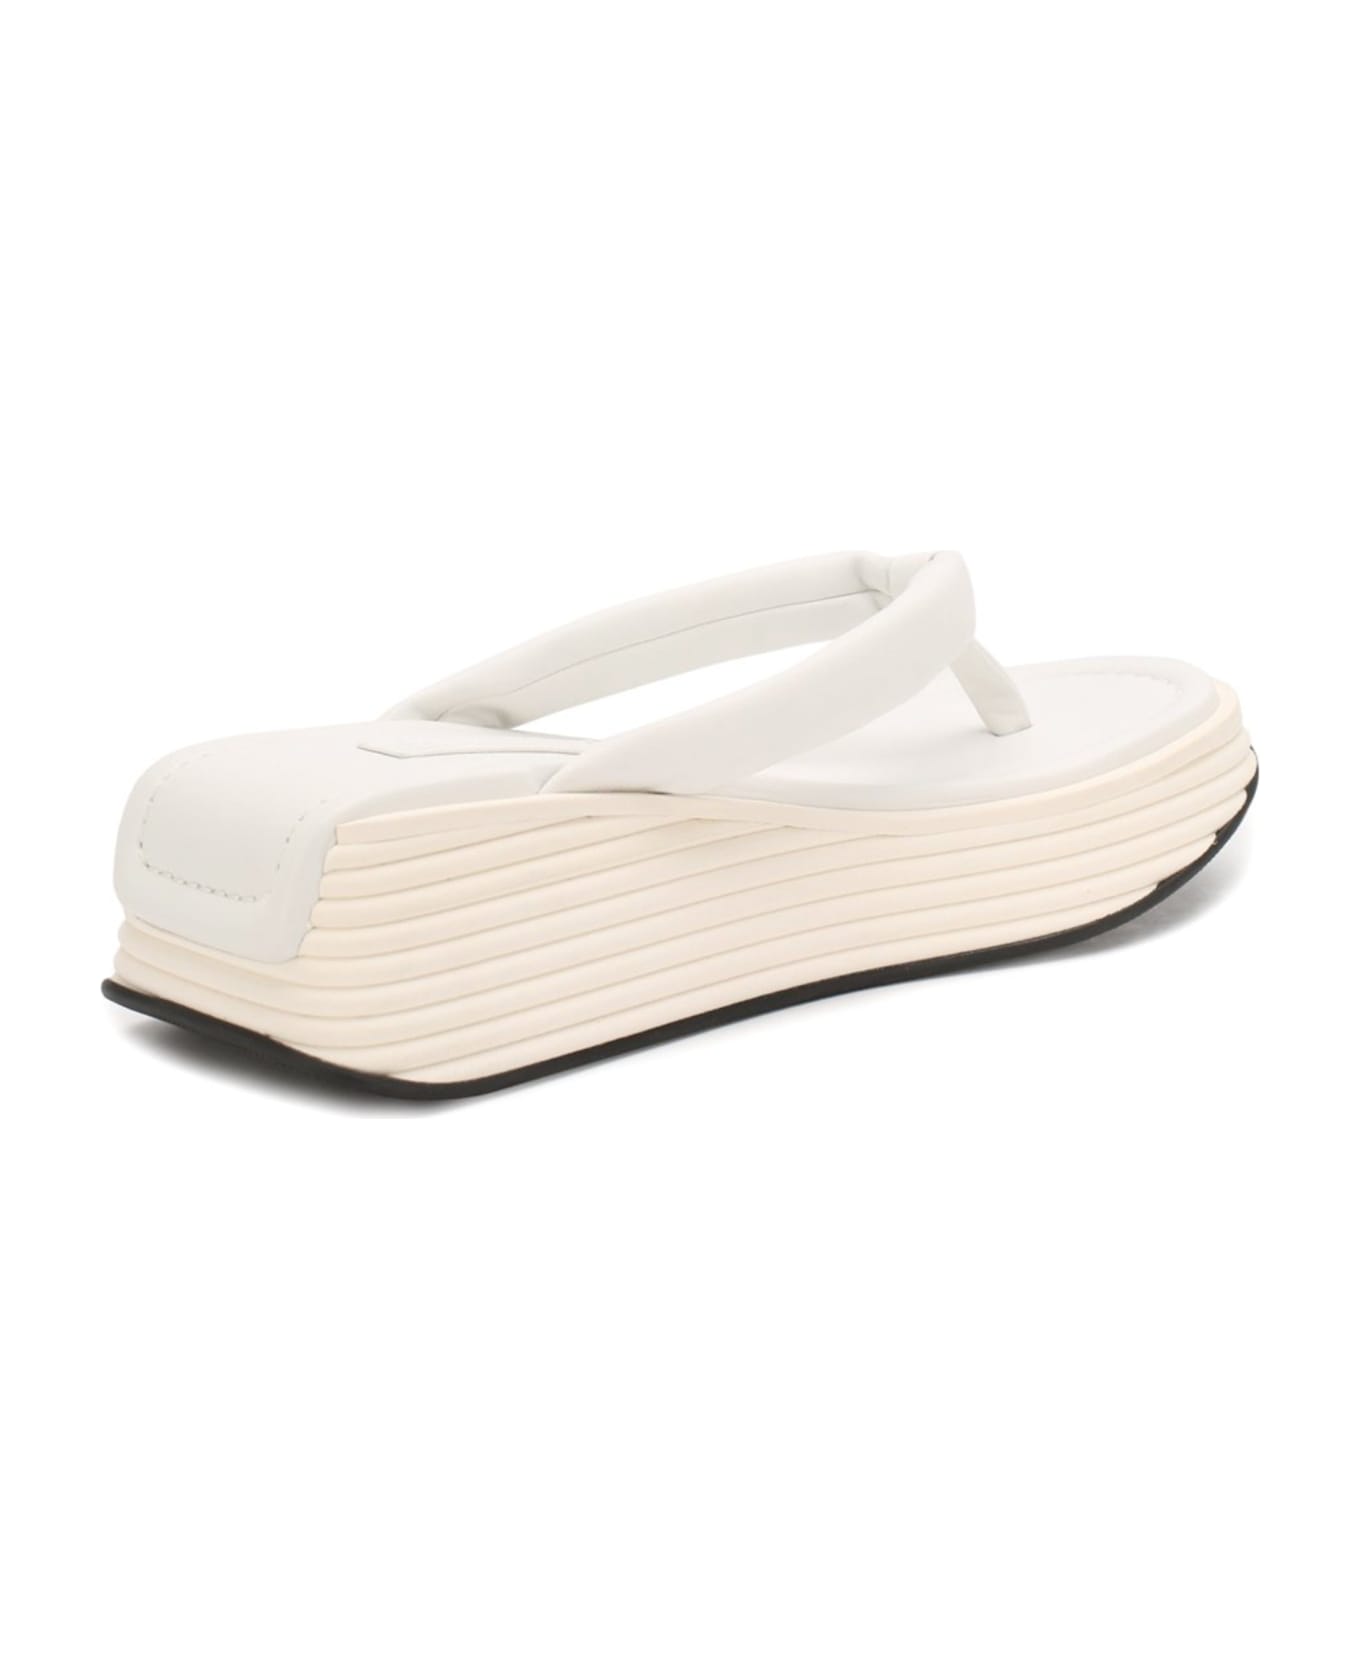 Givenchy Kyoto Sandals - White サンダル